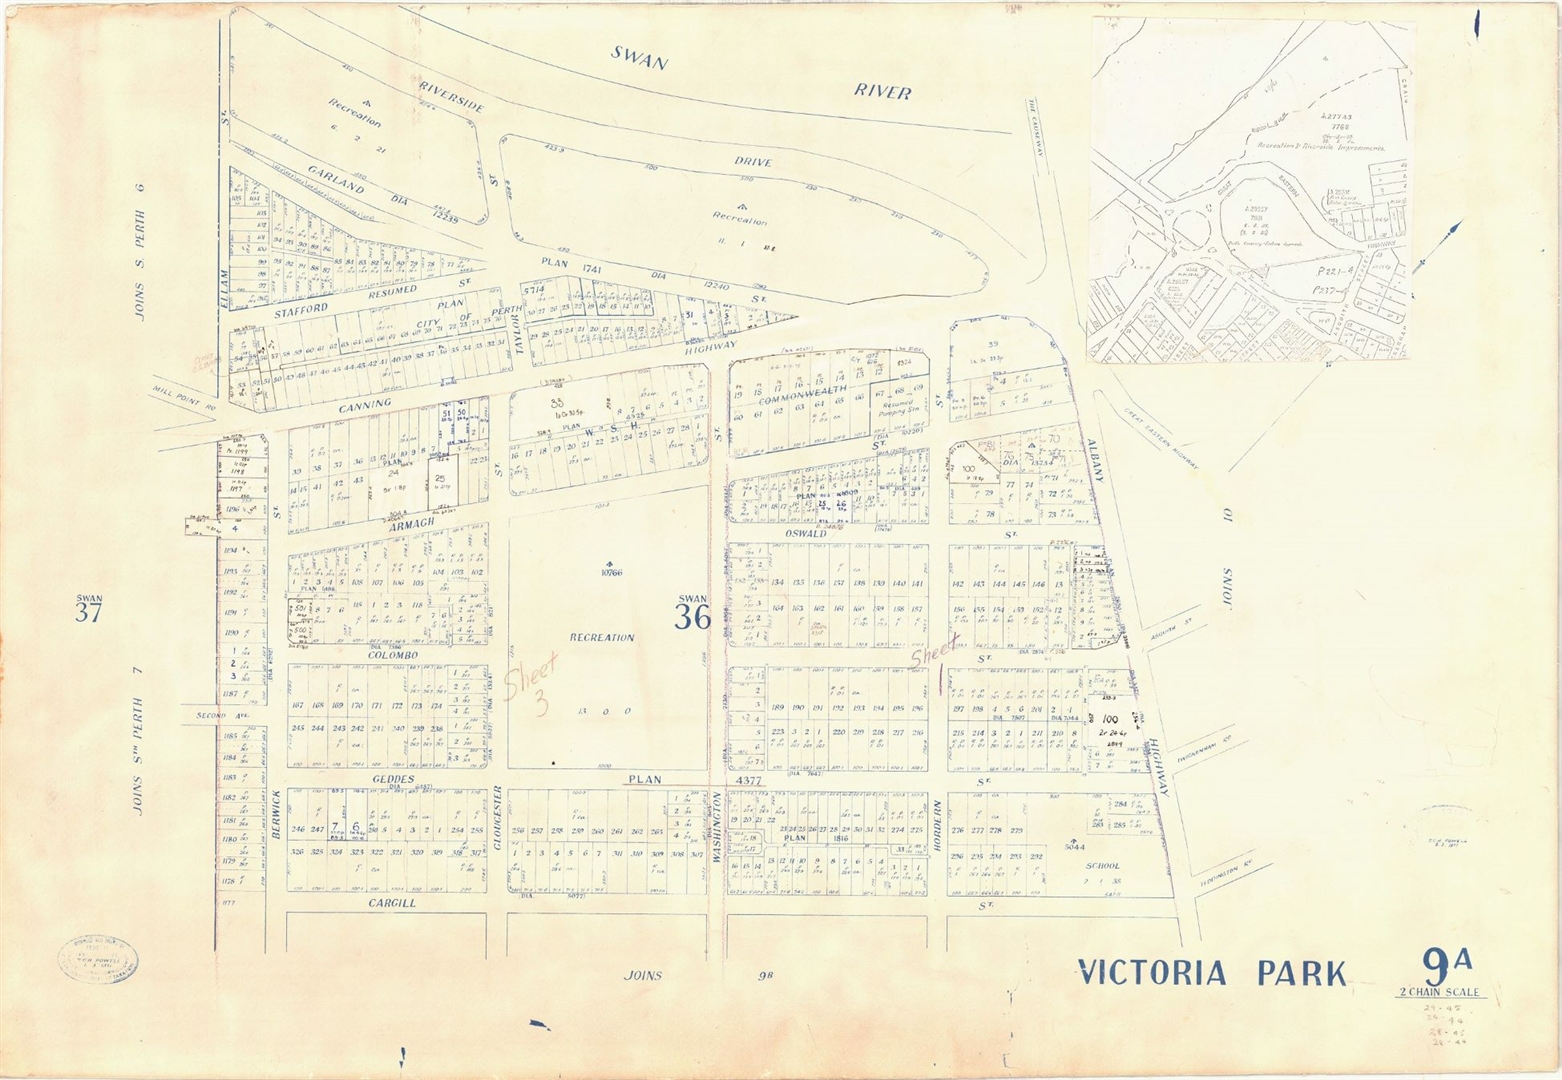 Victoria Park Plan 9 - 2 Chain Image